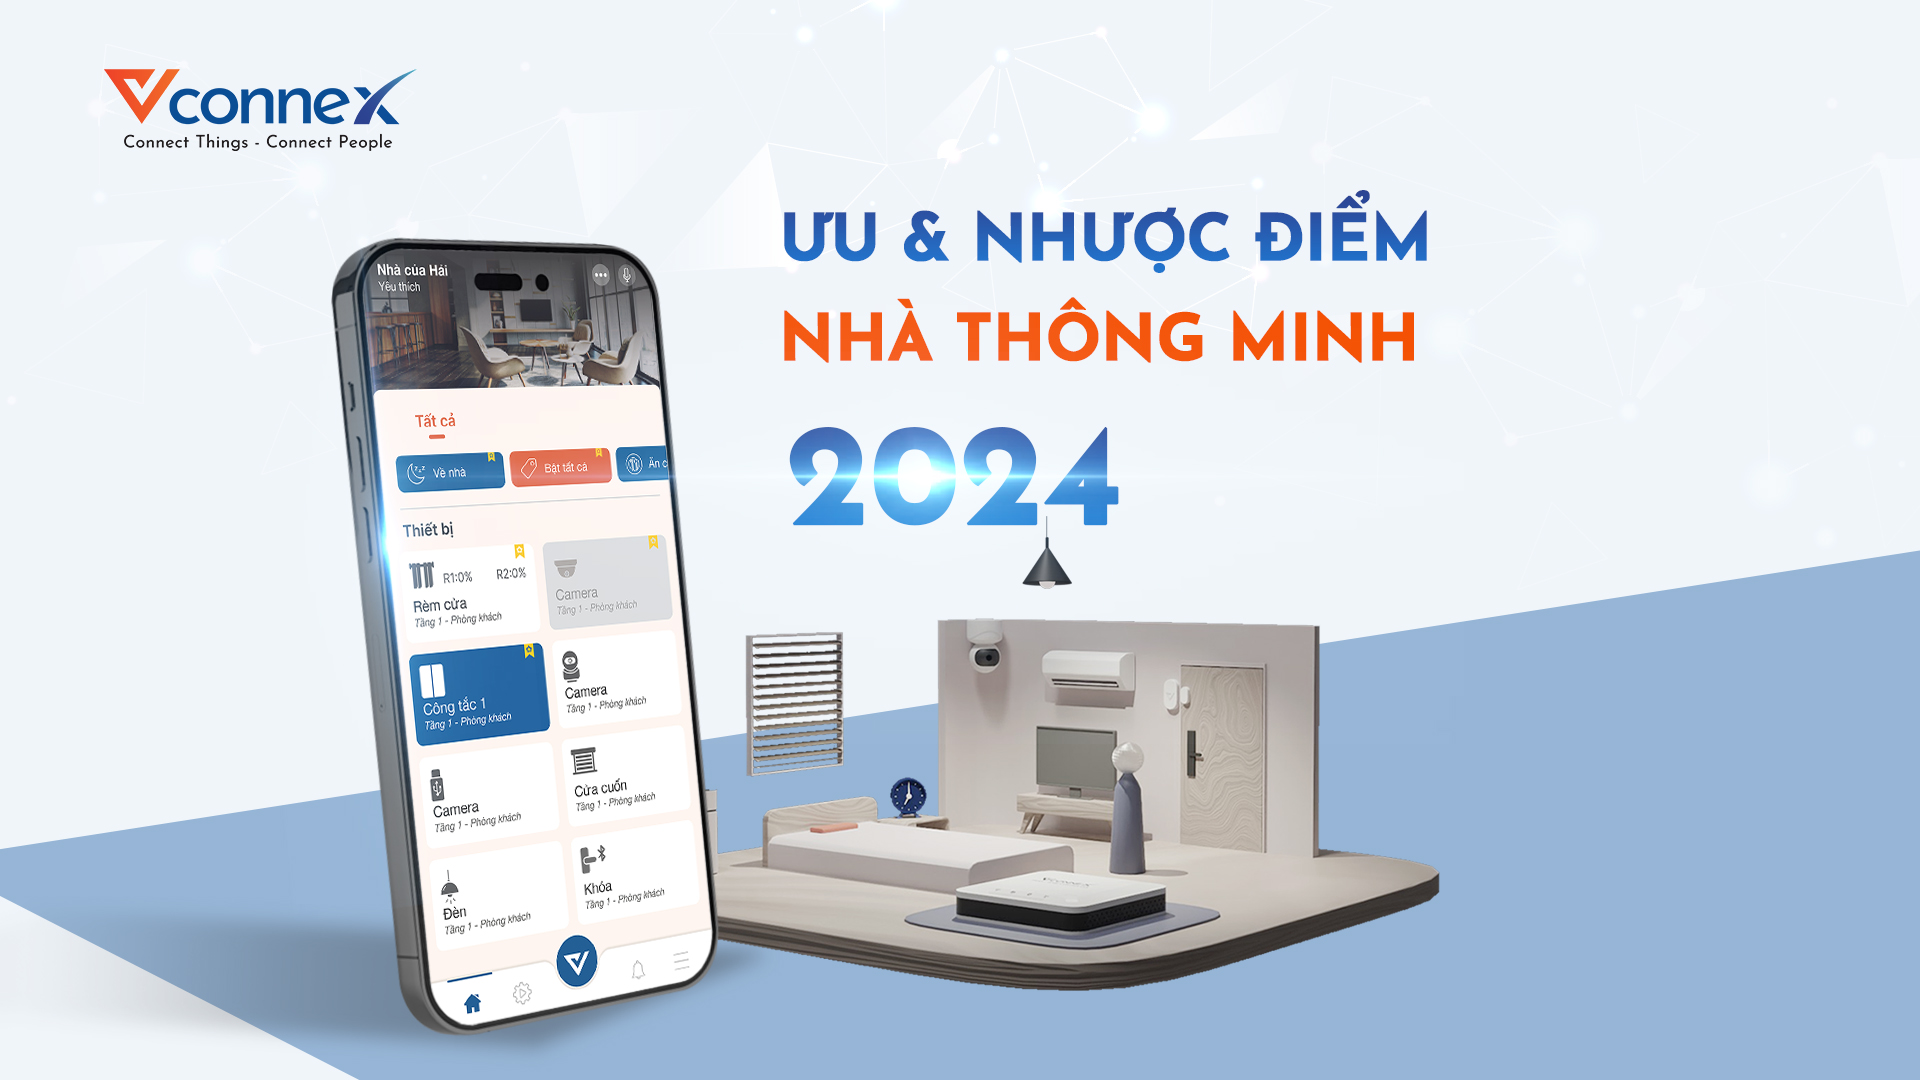 uu-nhuoc-diem-khi-su-dung-nha-thong-minh-nam-2024